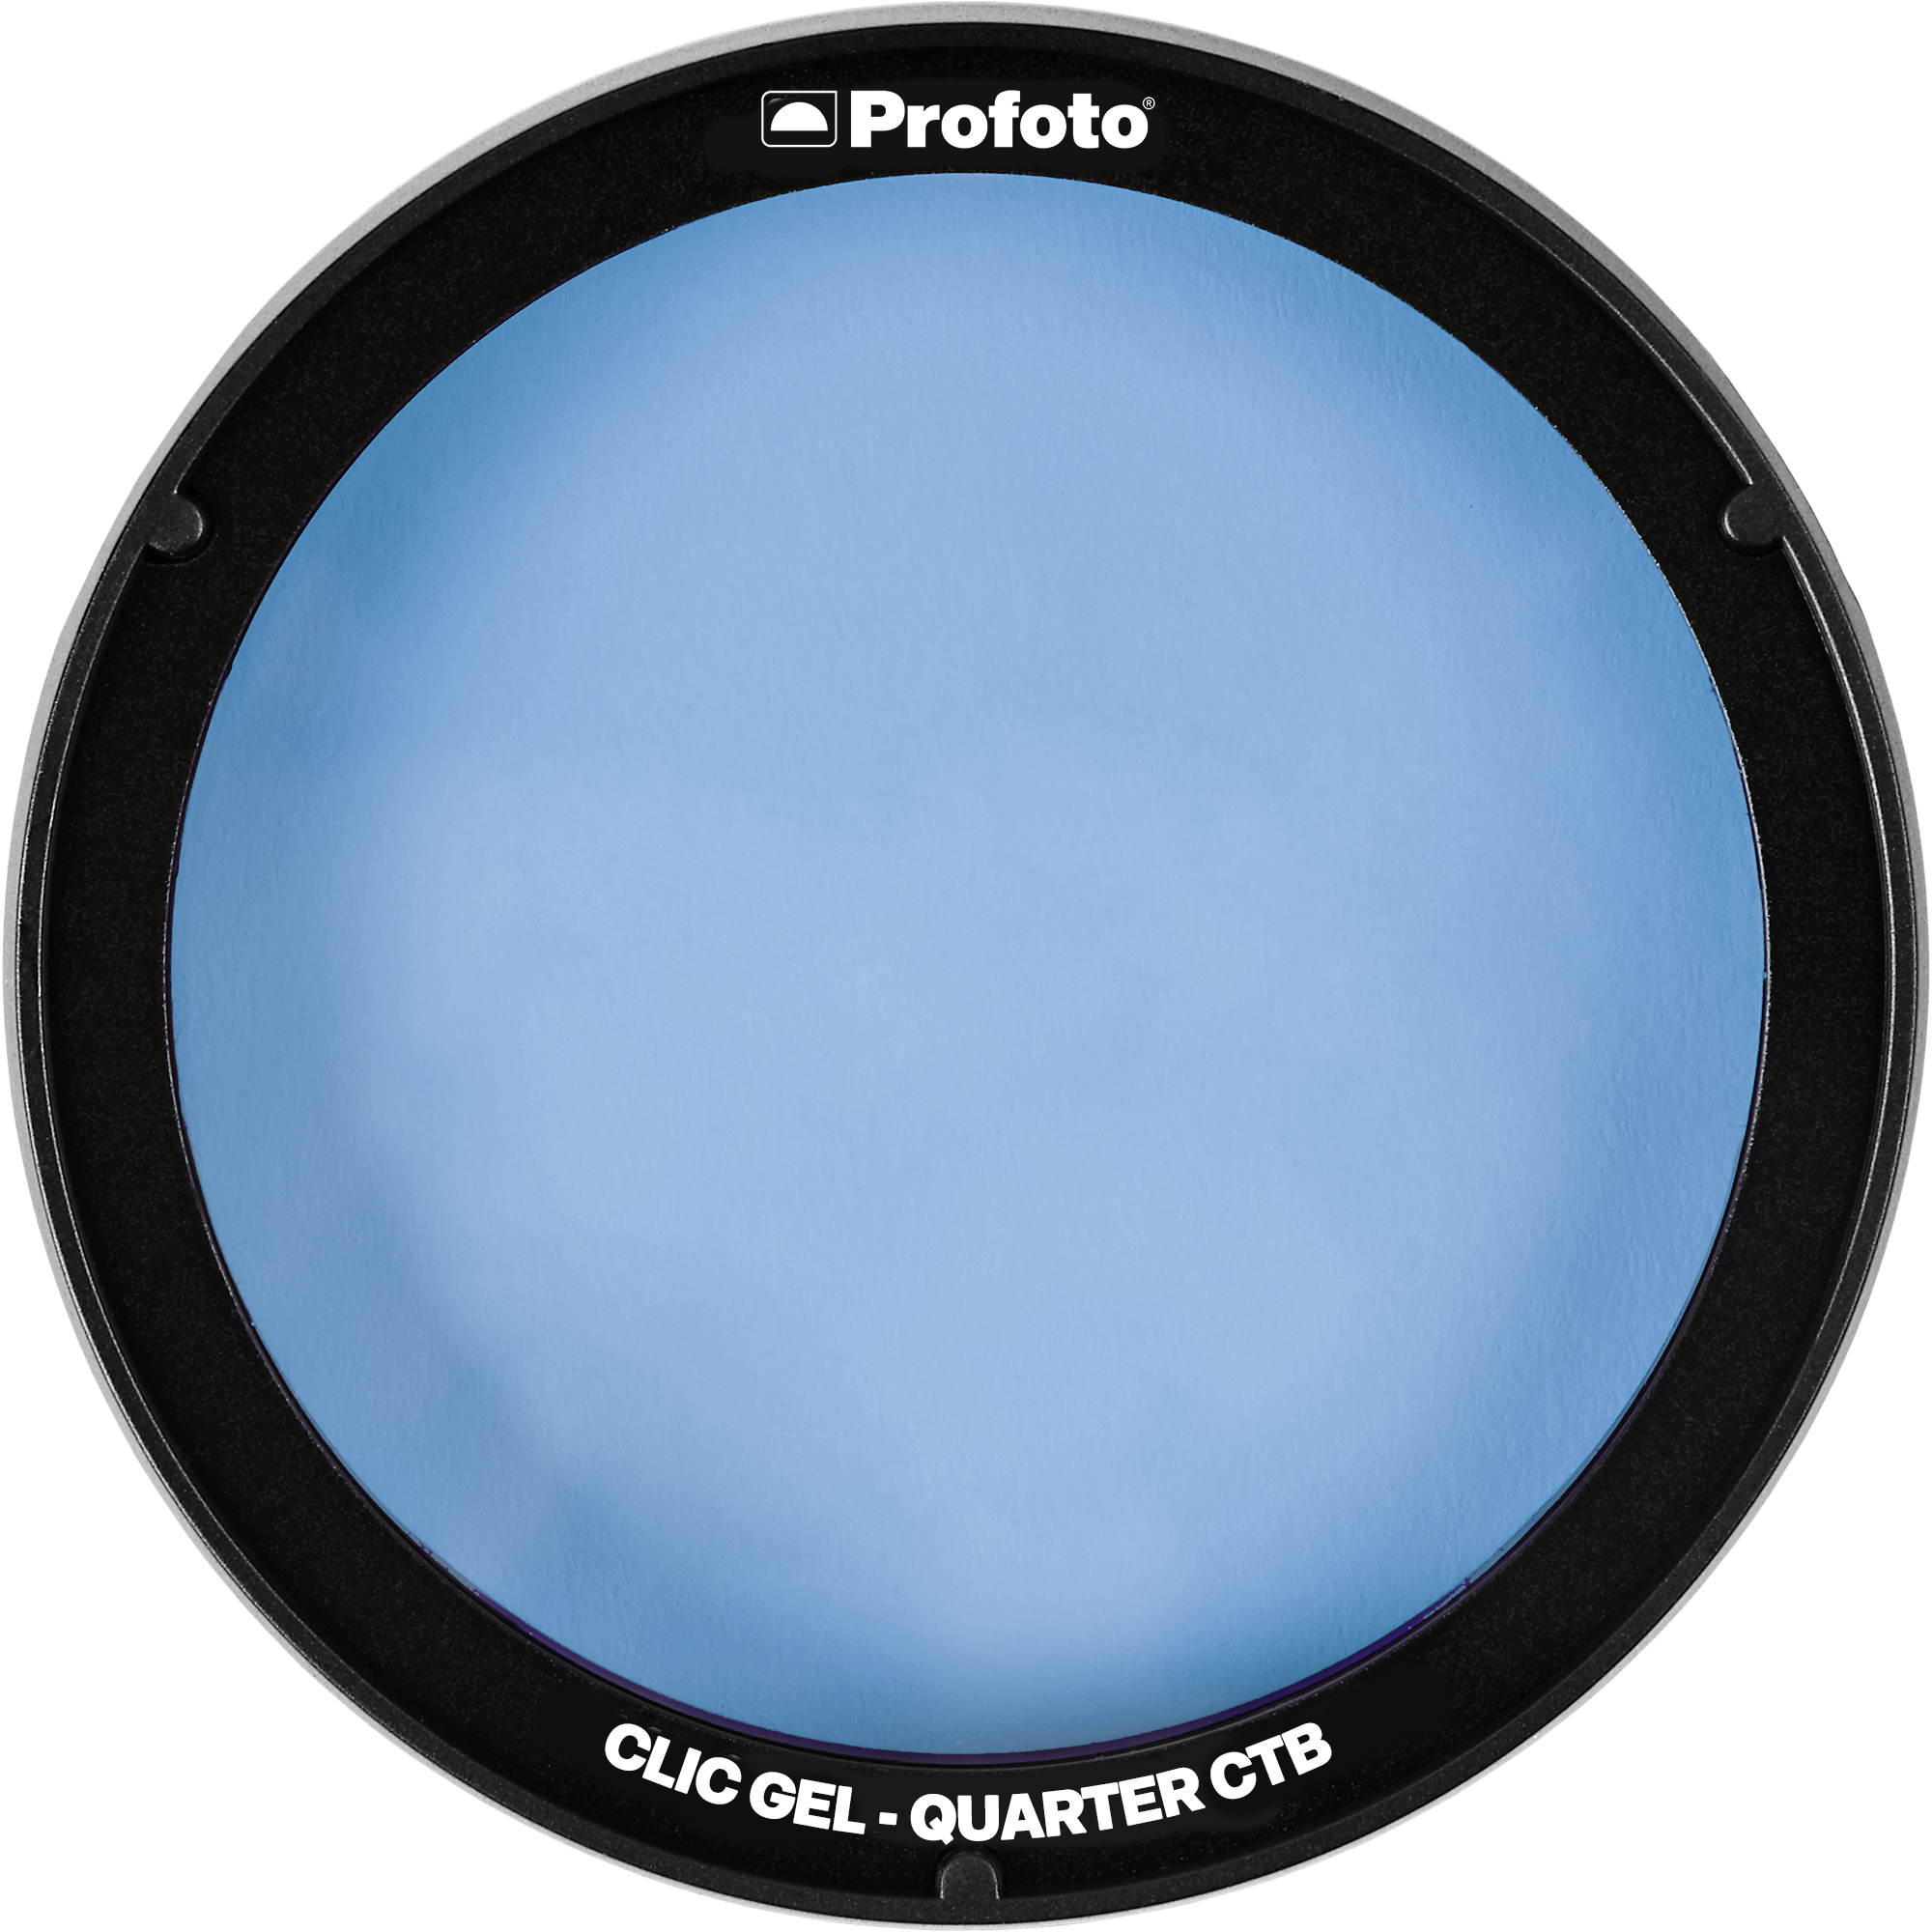 Profoto 101011 Clic Gel Quarter Ctb